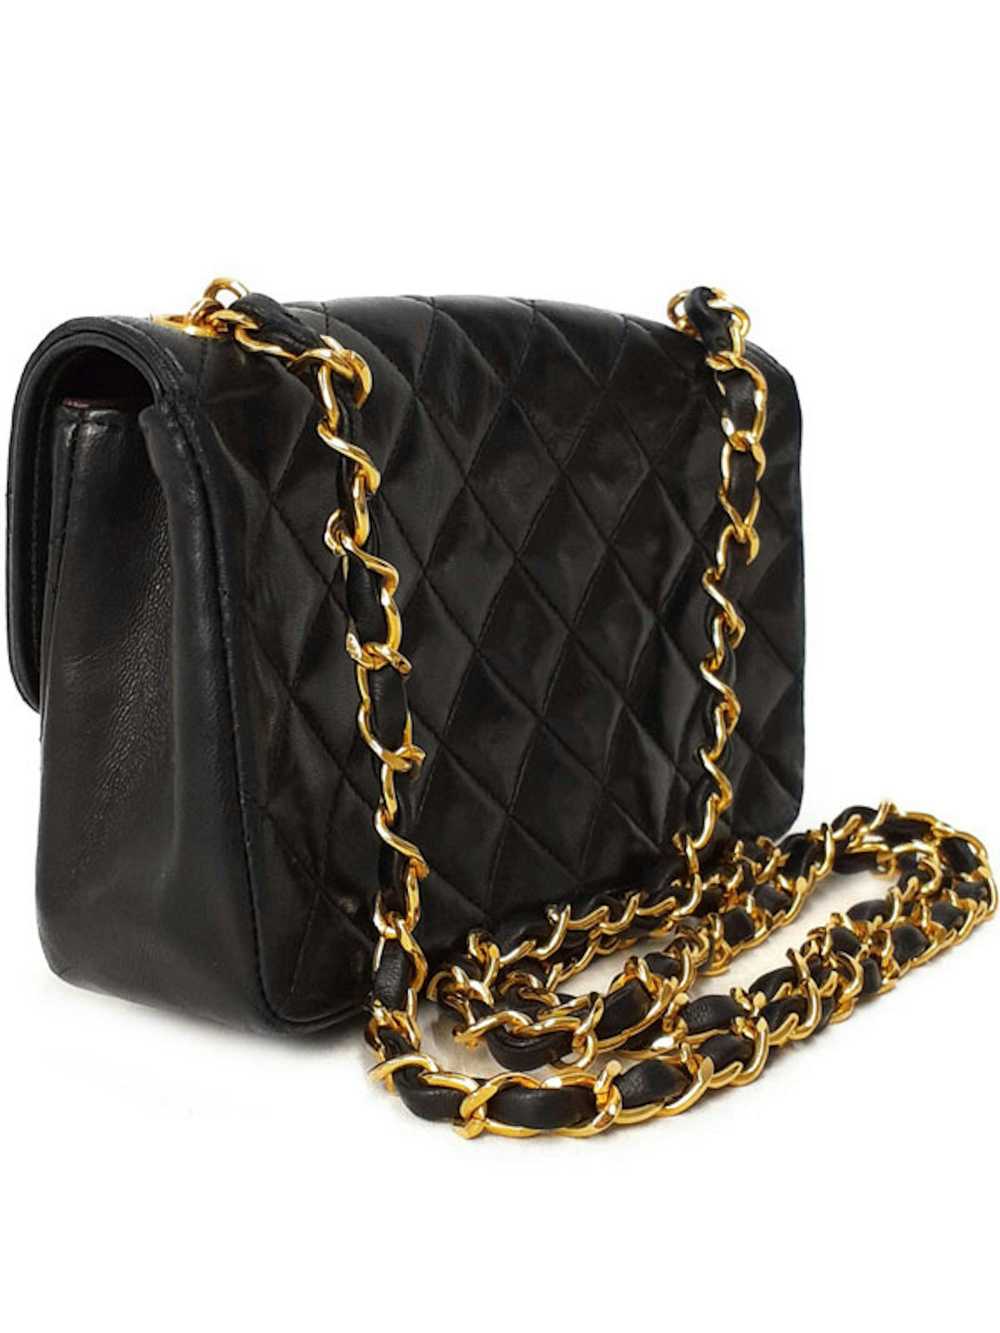 Chanel Chanel Mini Matelasse Chain Shoulder Bag - image 2